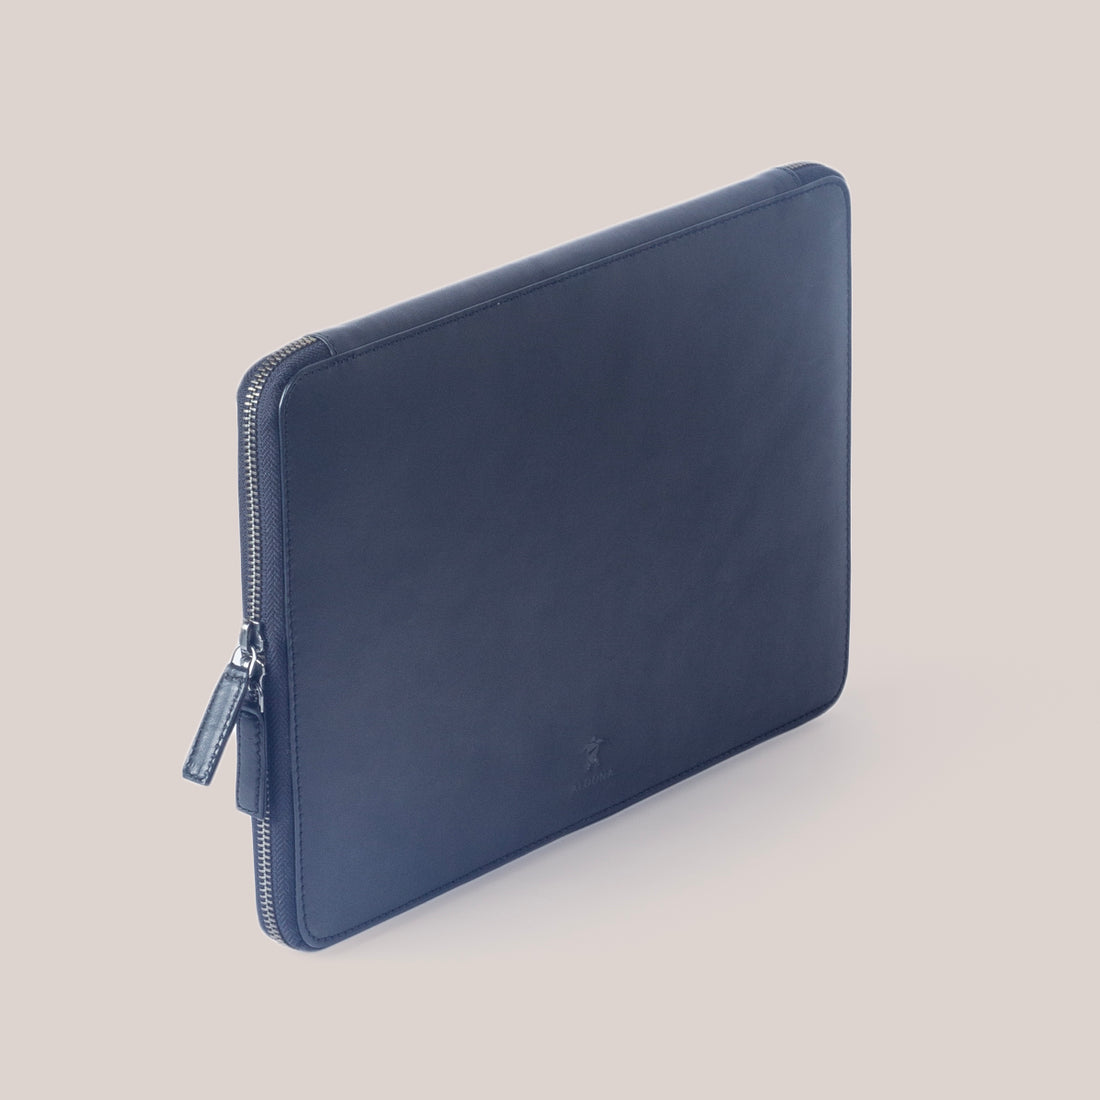 Microsoft Surface Zippered Laptop Case - Onyx Black